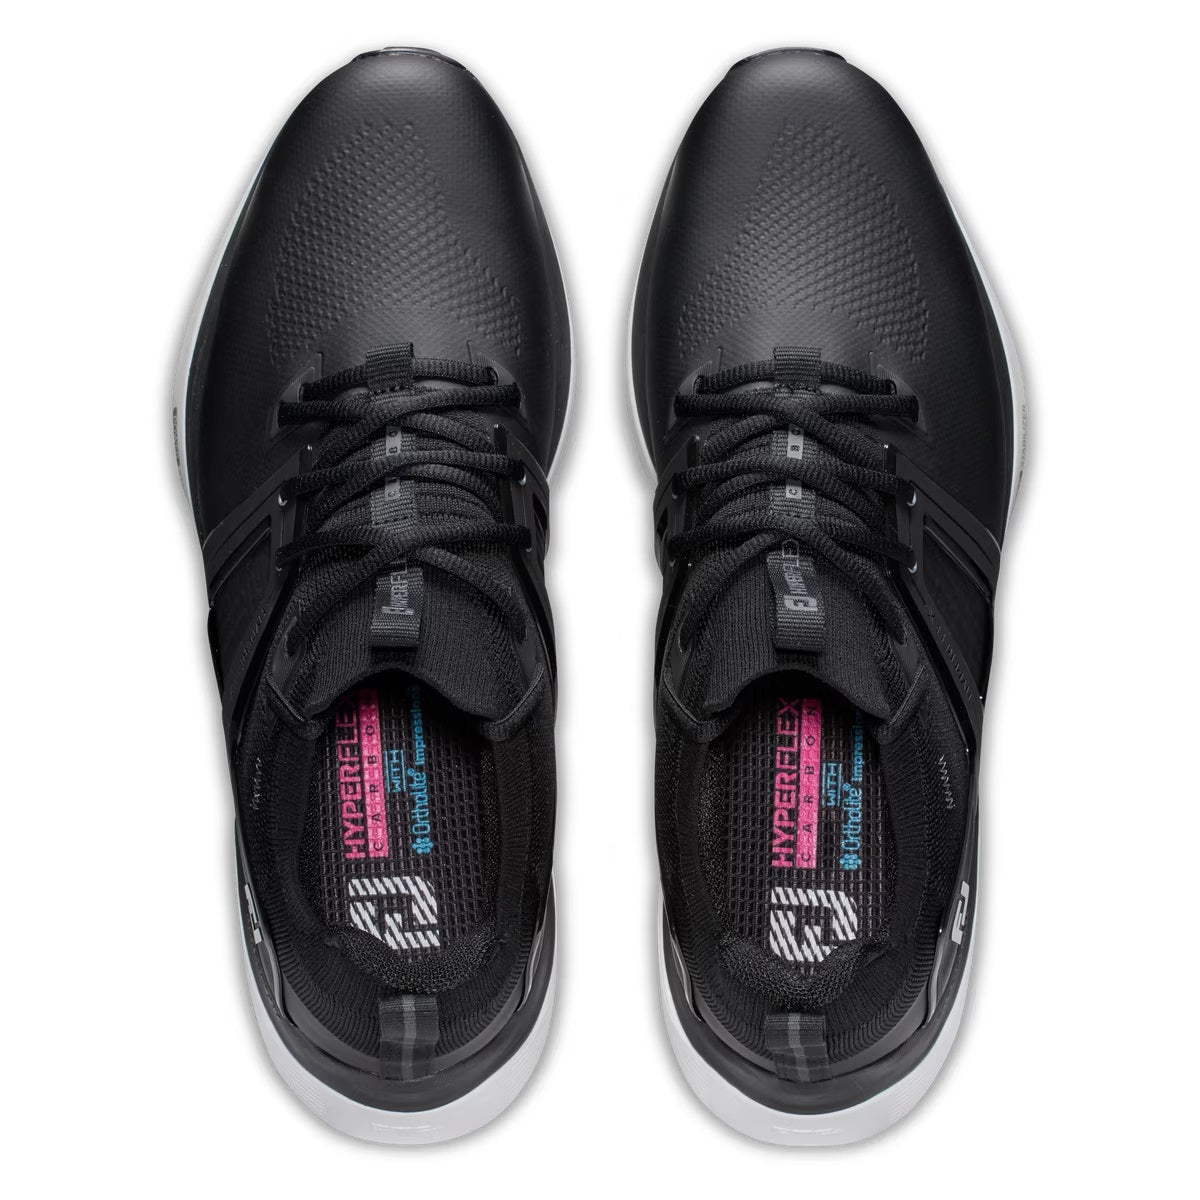 FootJoy HyperFlex Carbon Golf Shoes 51119 Black (Previous Season Style)